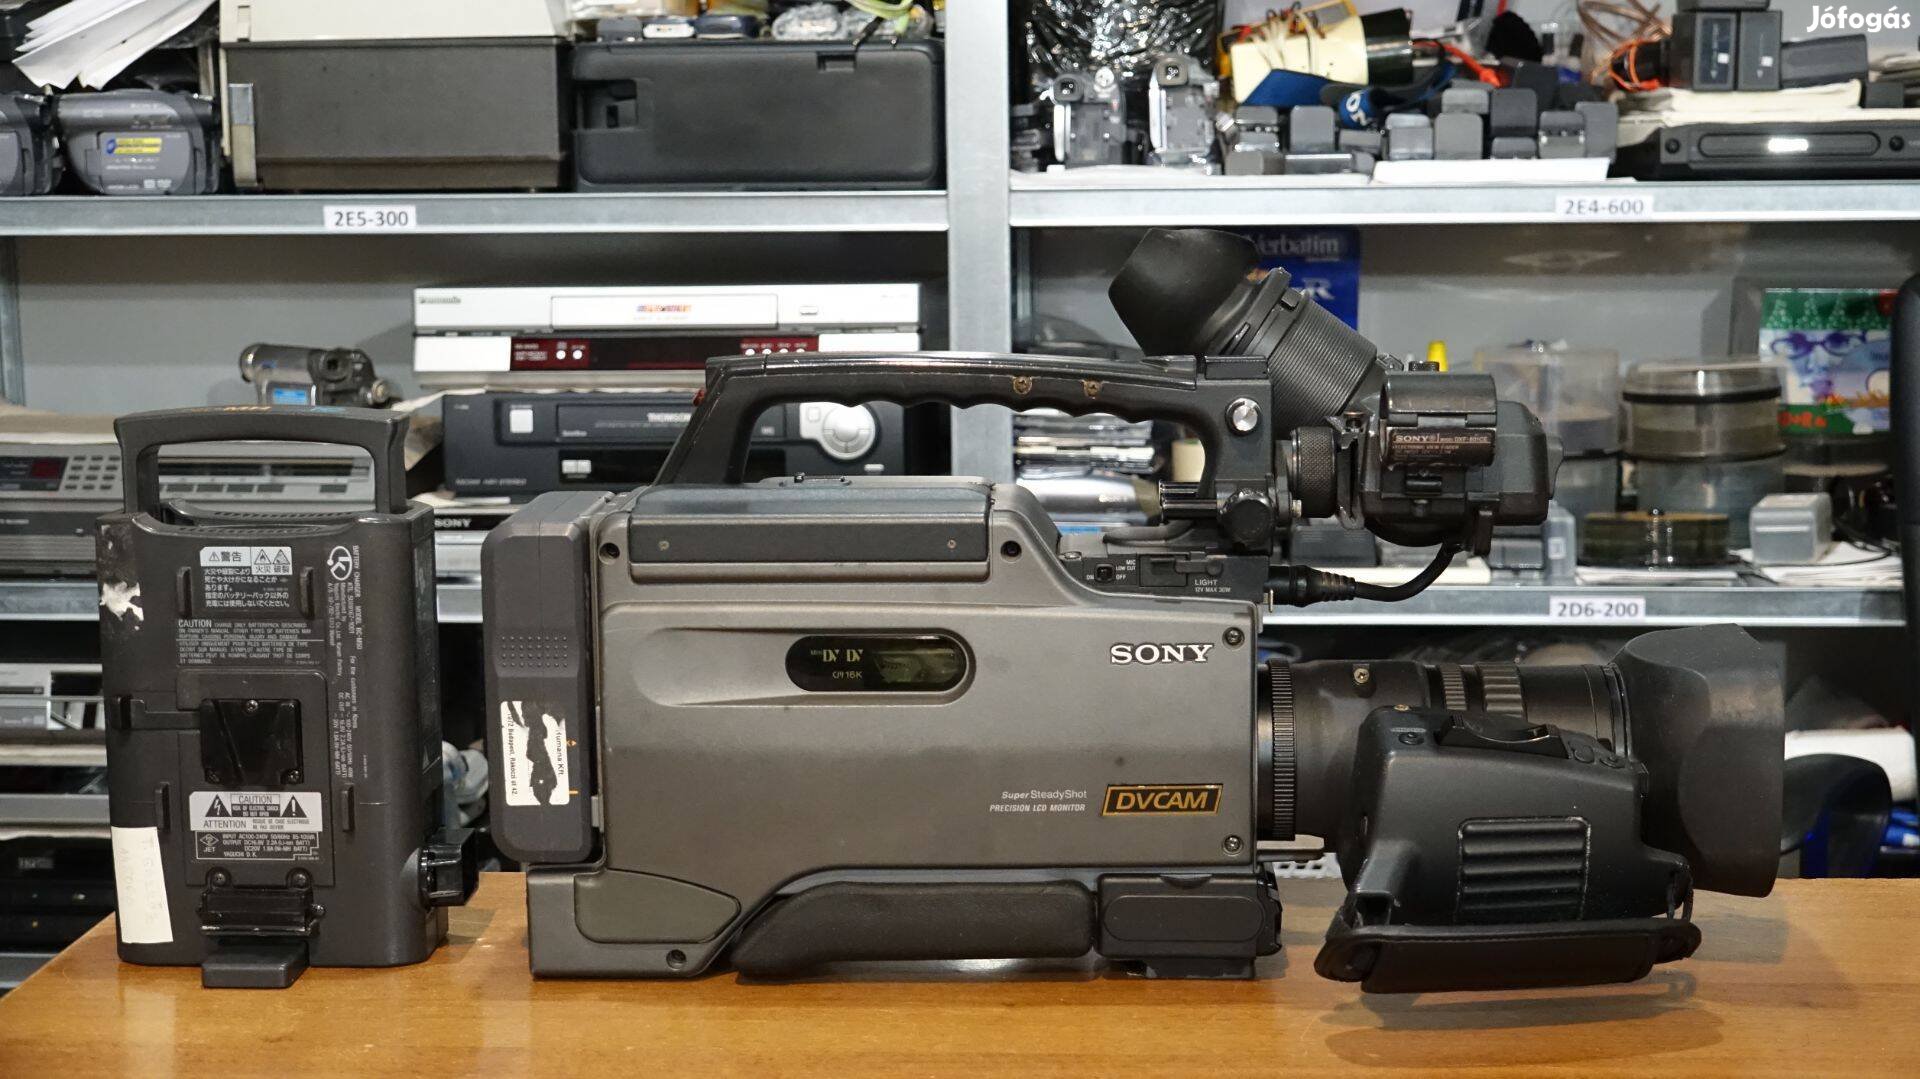 Sony DSR-250P Dvcam (Minidv) Videokamera